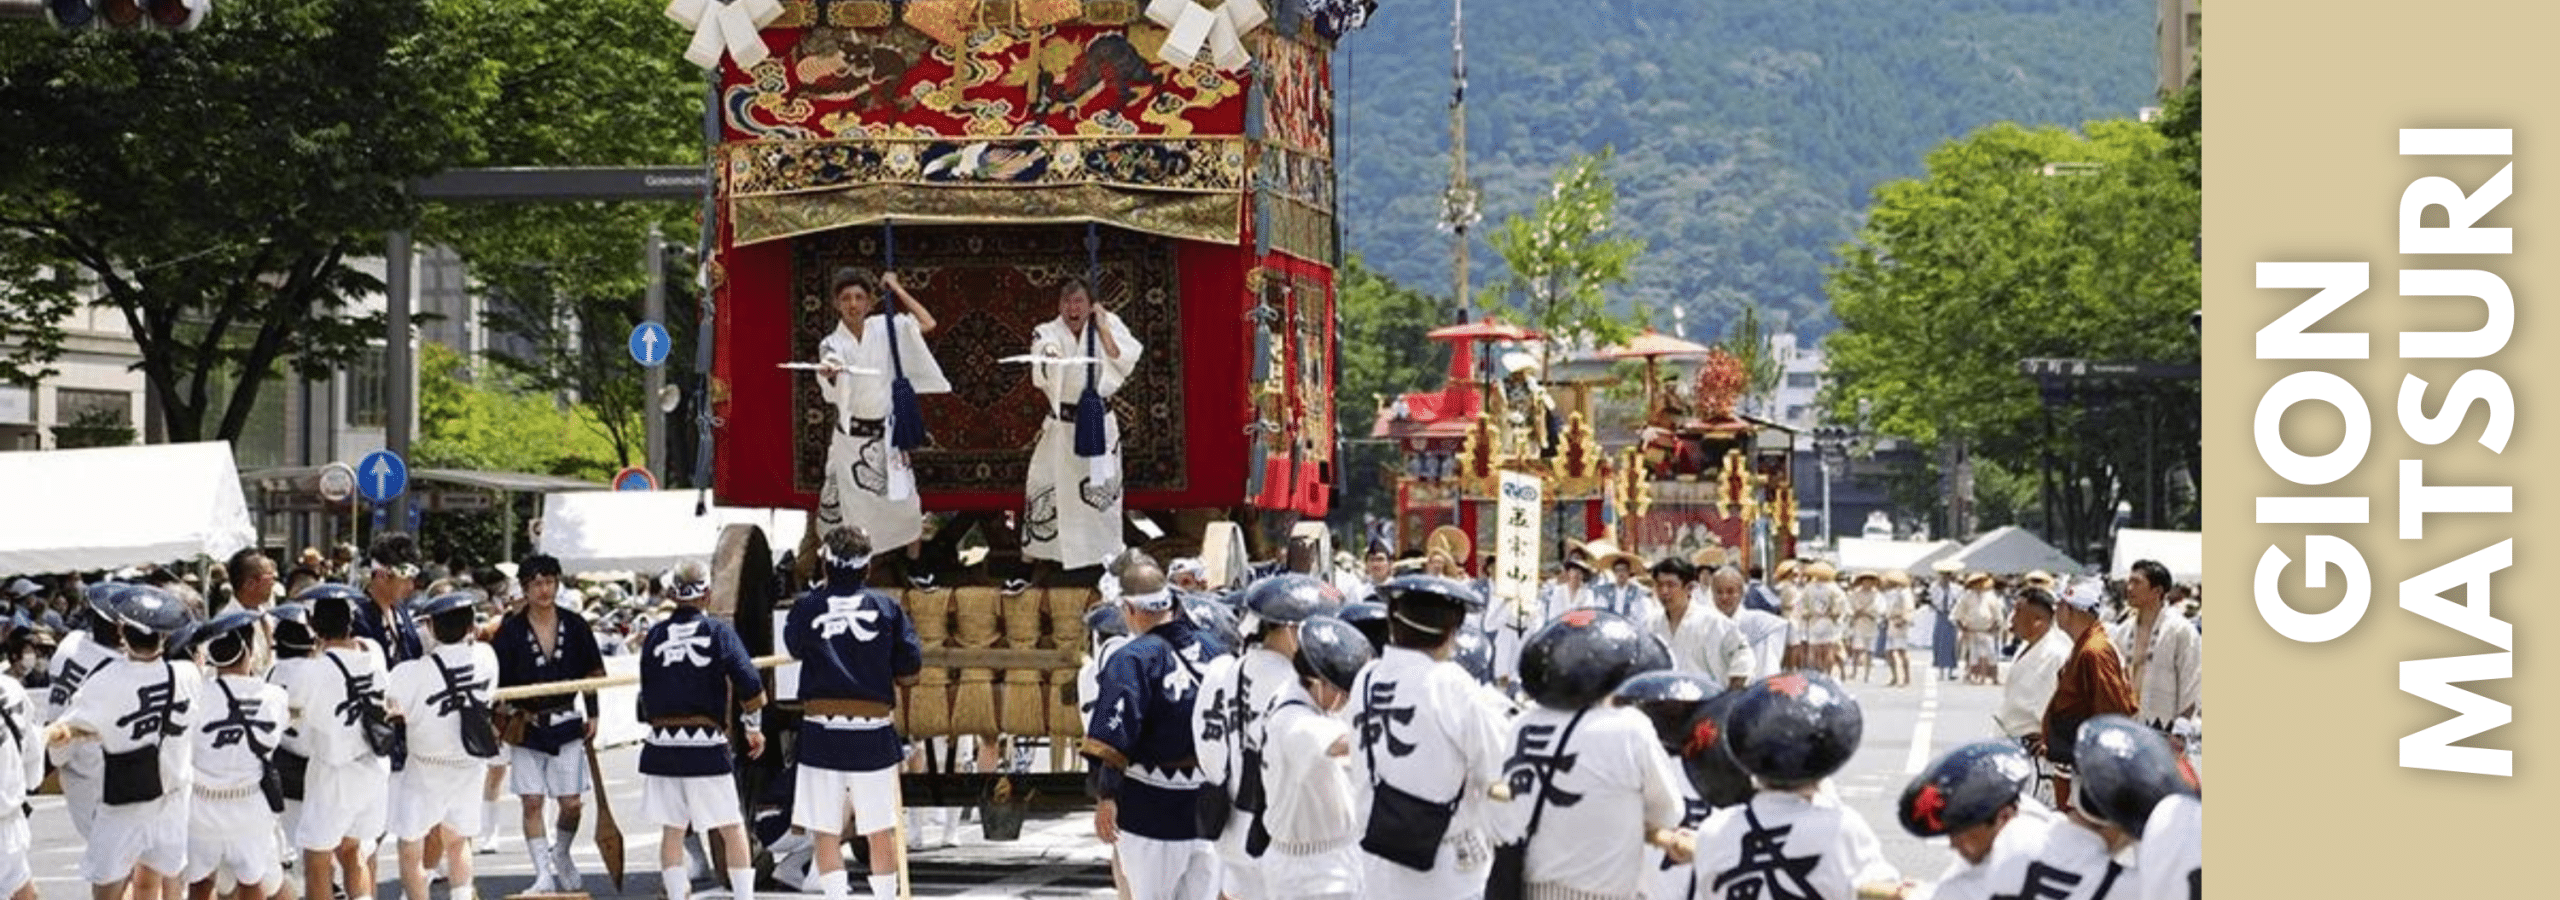 gion-maturi-japon-festival